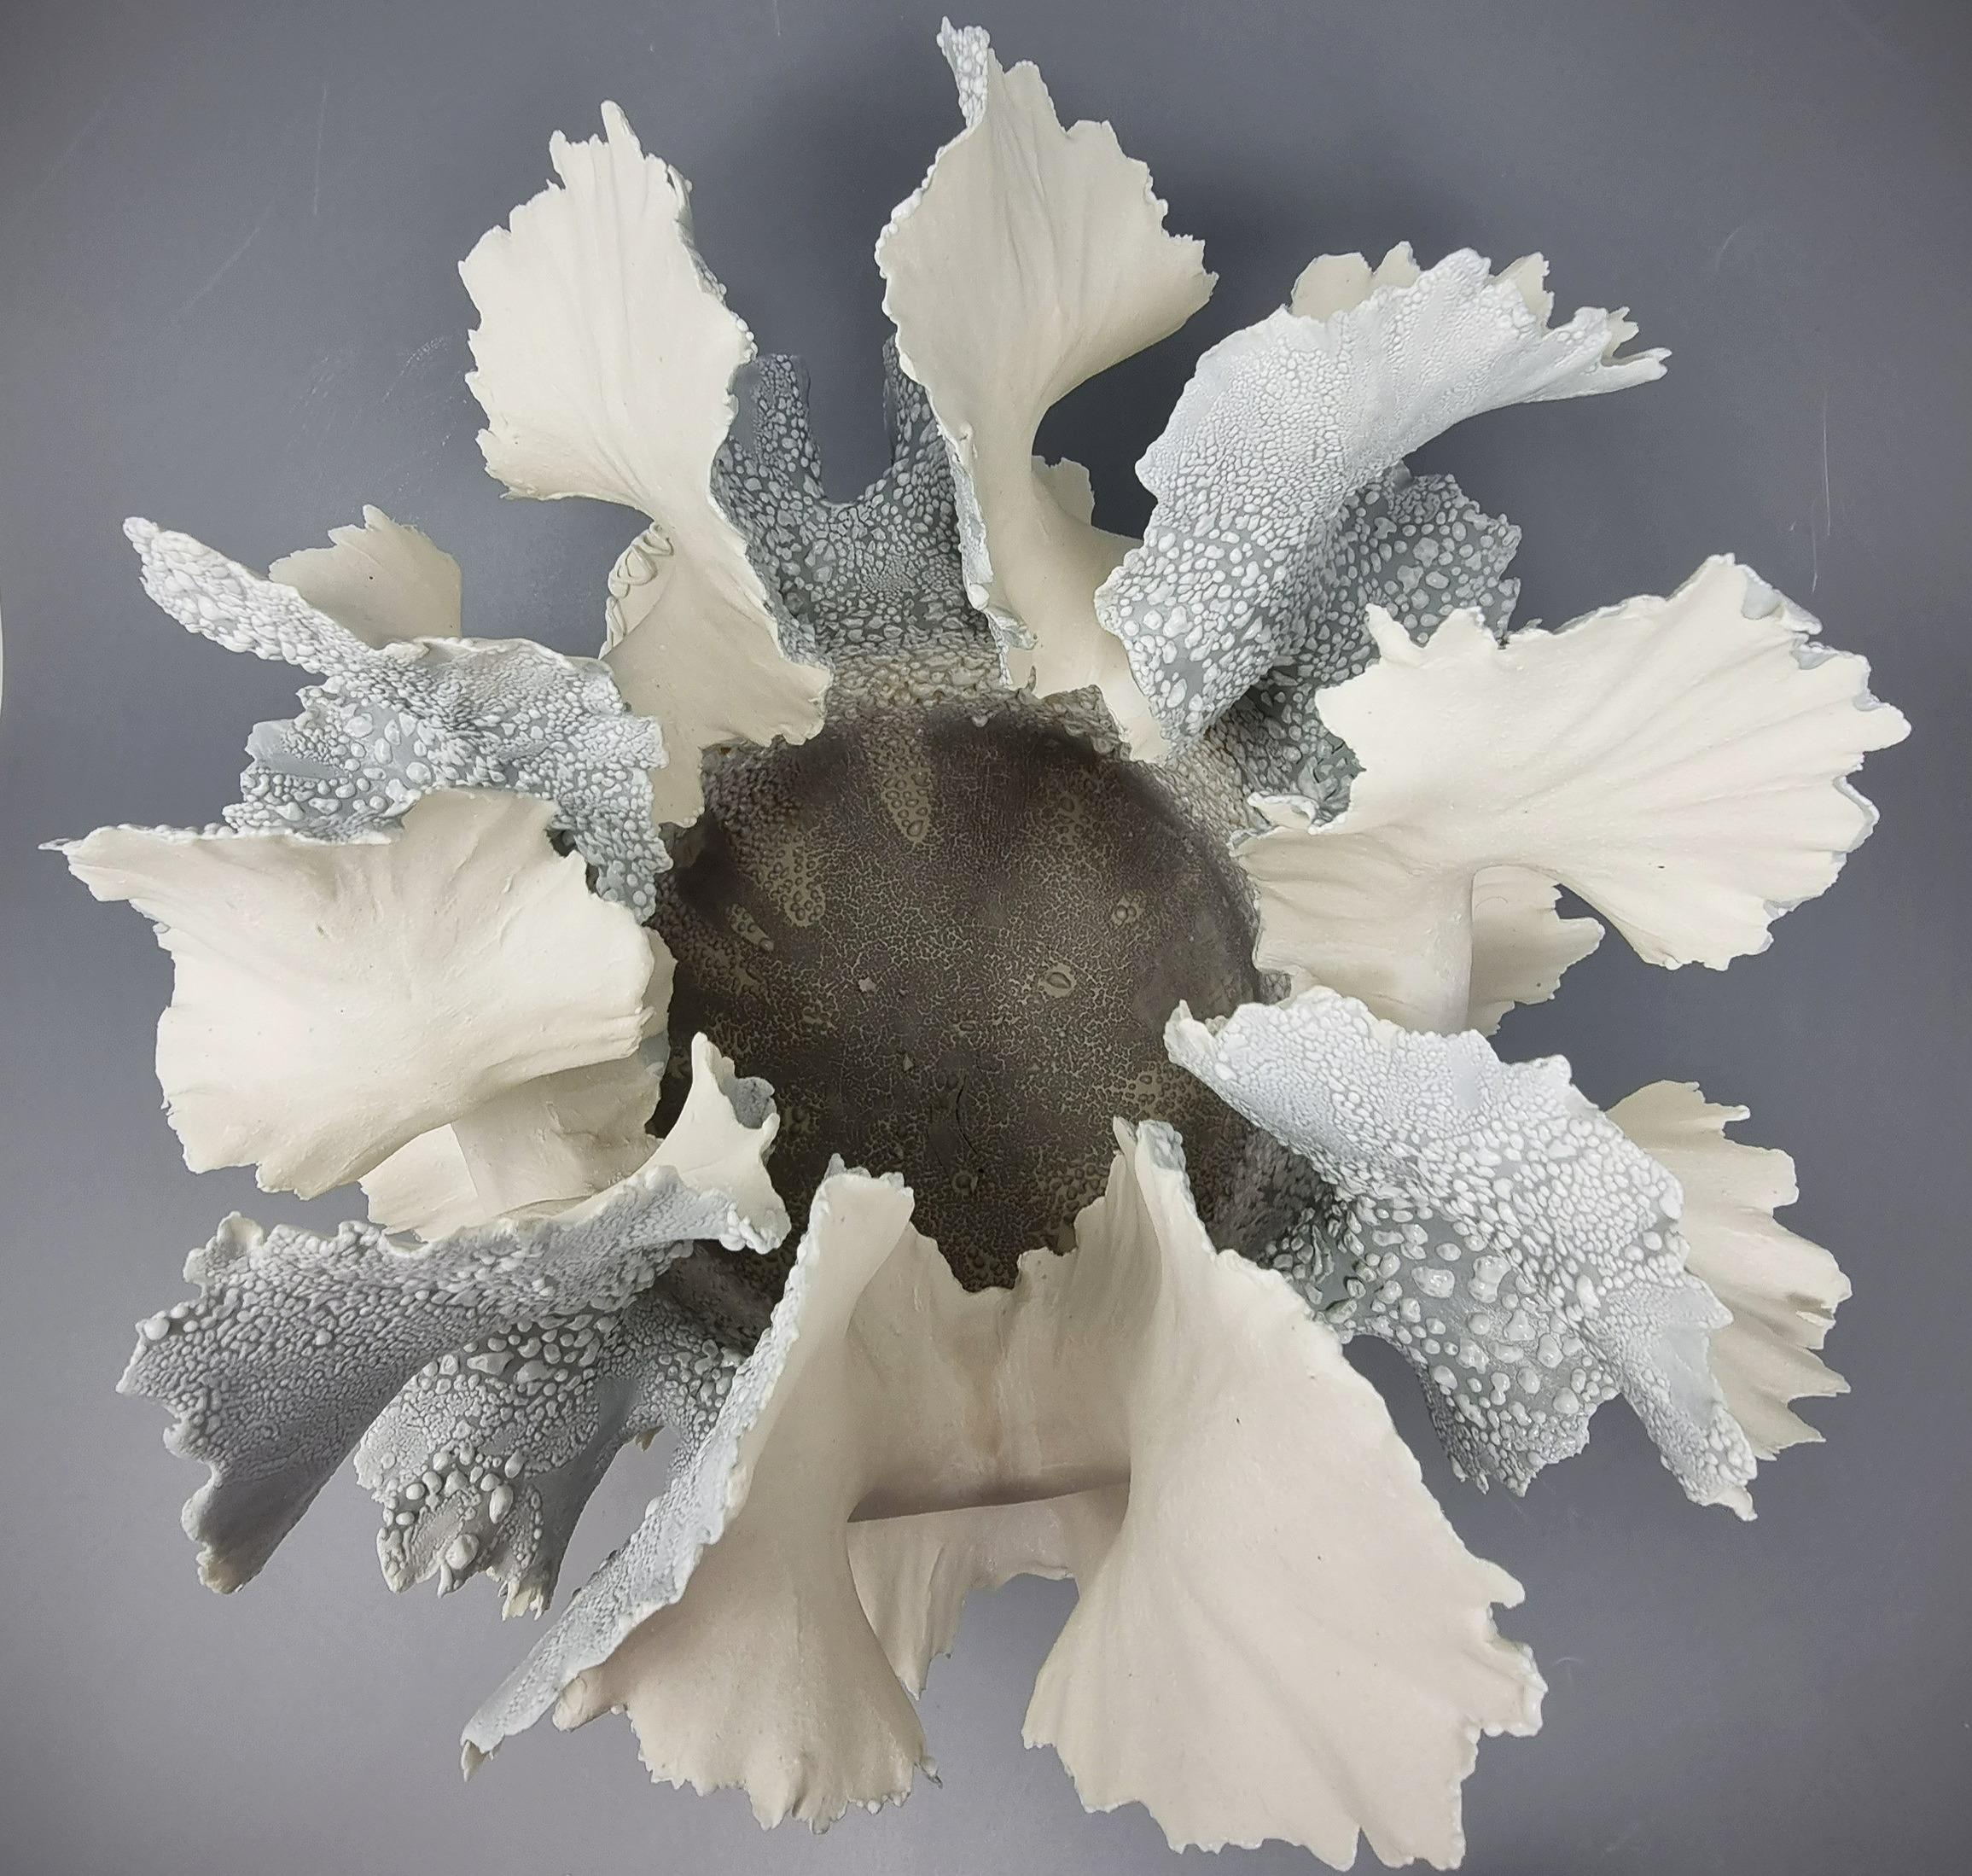 Contemporary Handbuilt Paperporcelain Sculpture with Light Grey /106